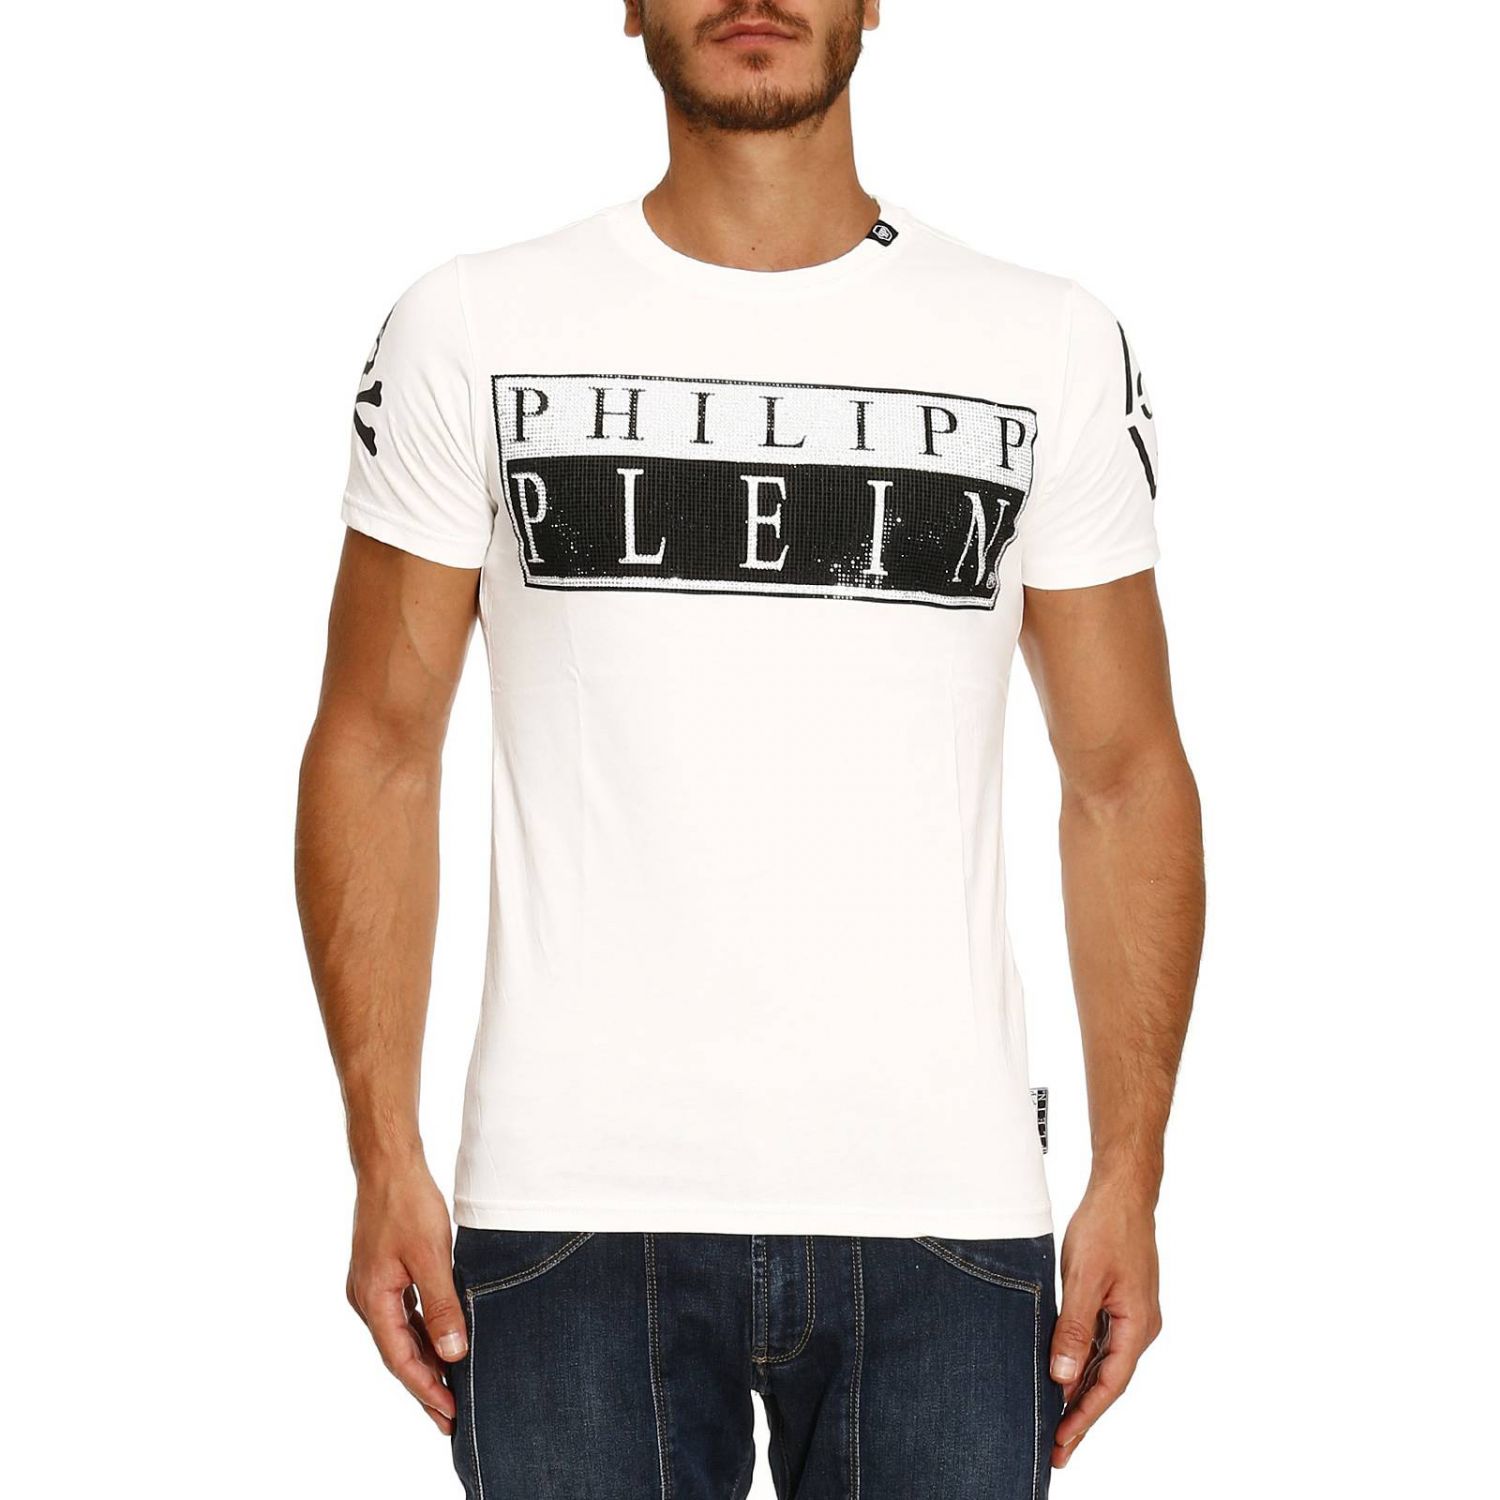 T-shirt men Philipp Plein | T-Shirt Philipp Plein Men White | T-Shirt Philipp Plein MTK1358